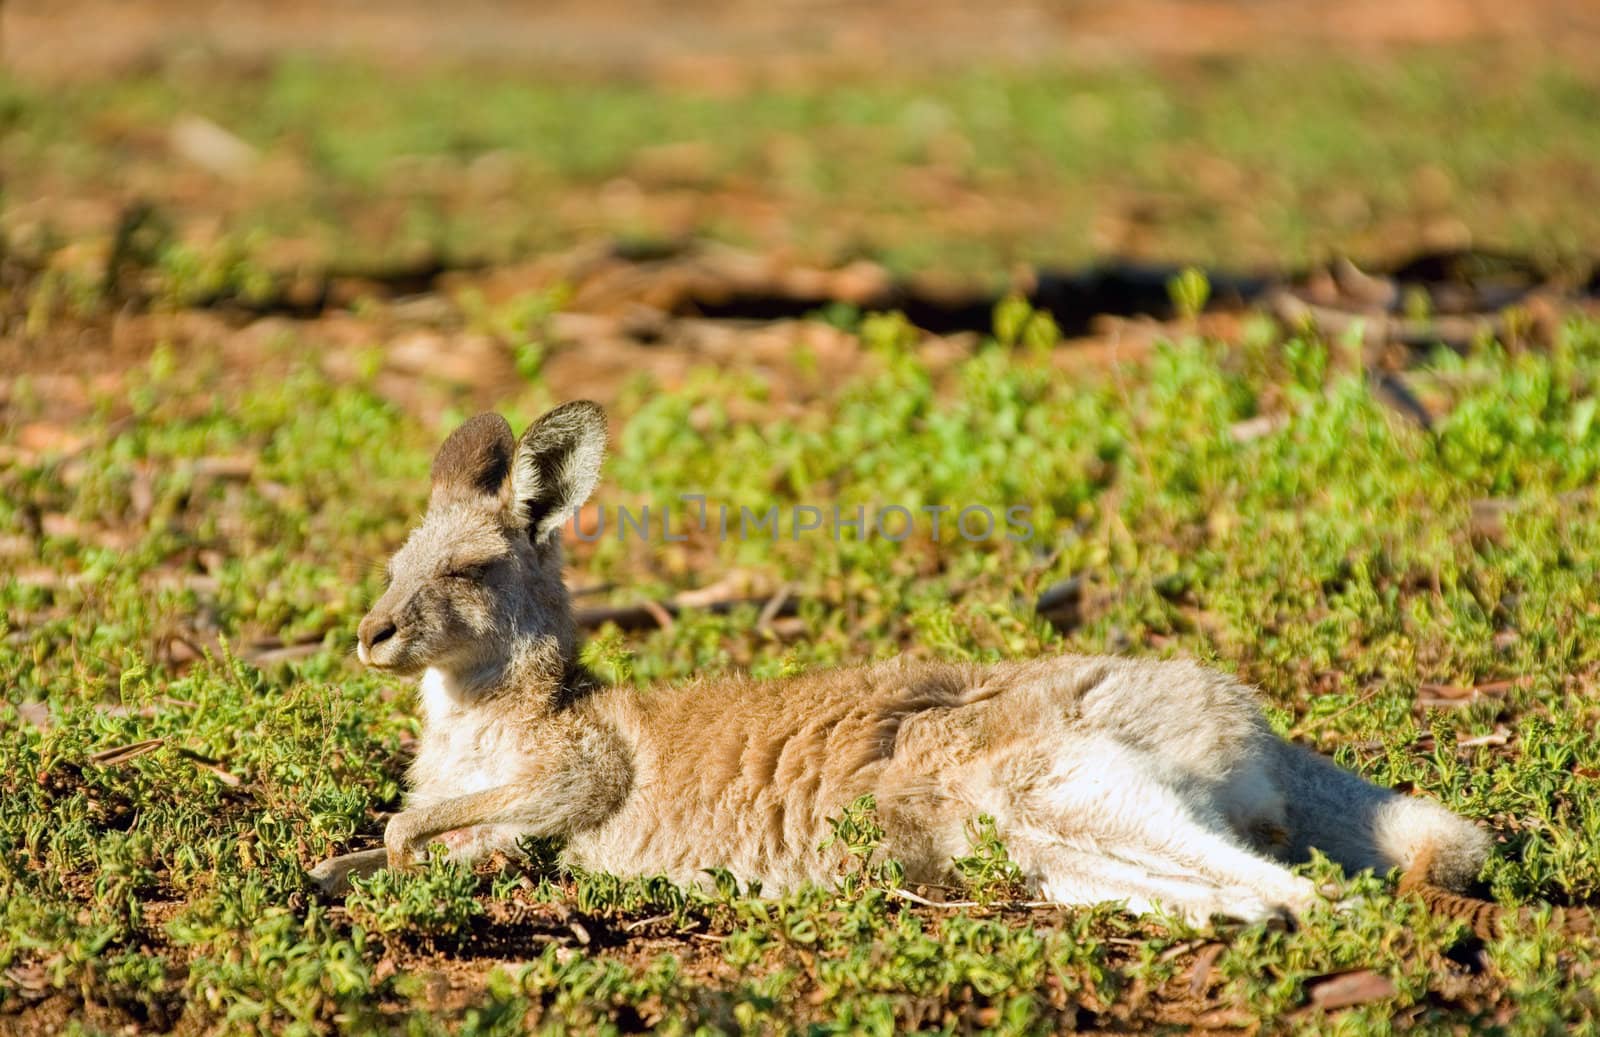 an eastern grey kangaroo is laying down, resting and enjoying the morning sun